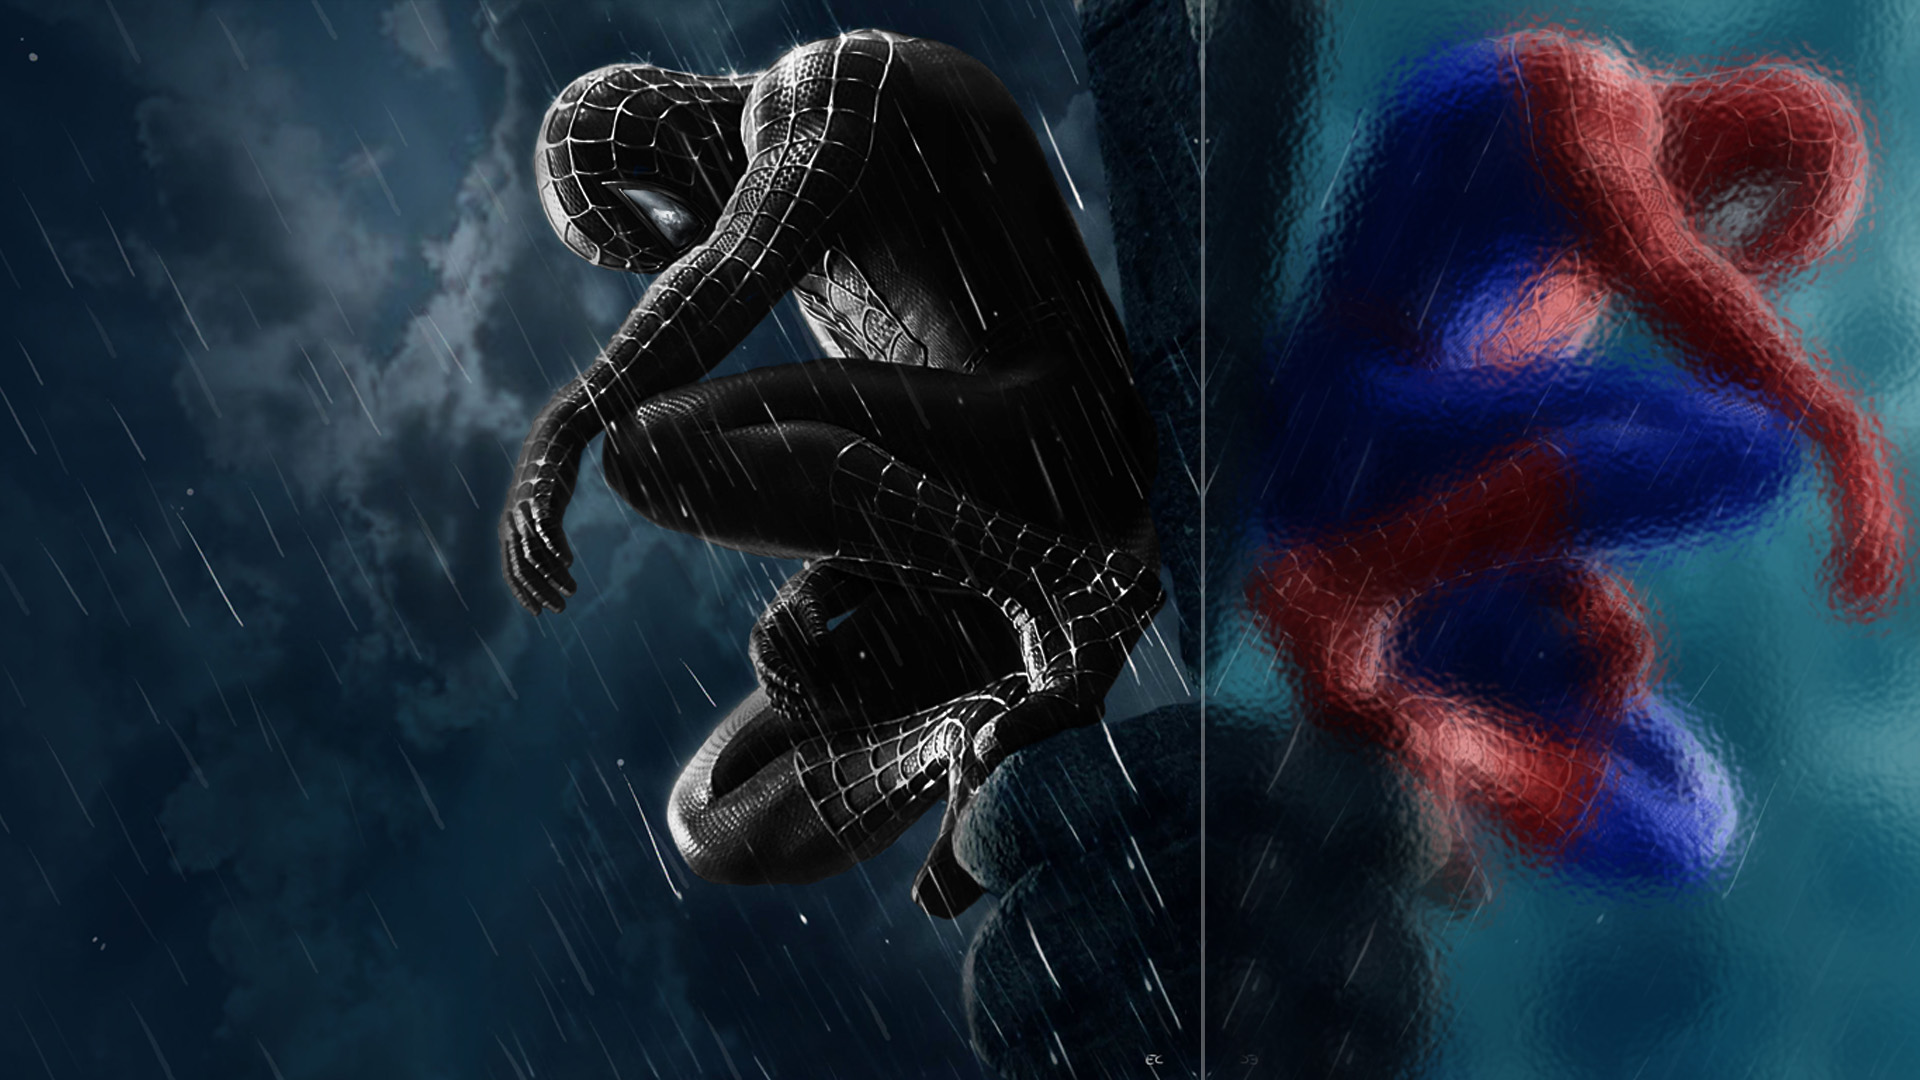 Black Spiderman Wallpaper for Desktop - Uncalke.com